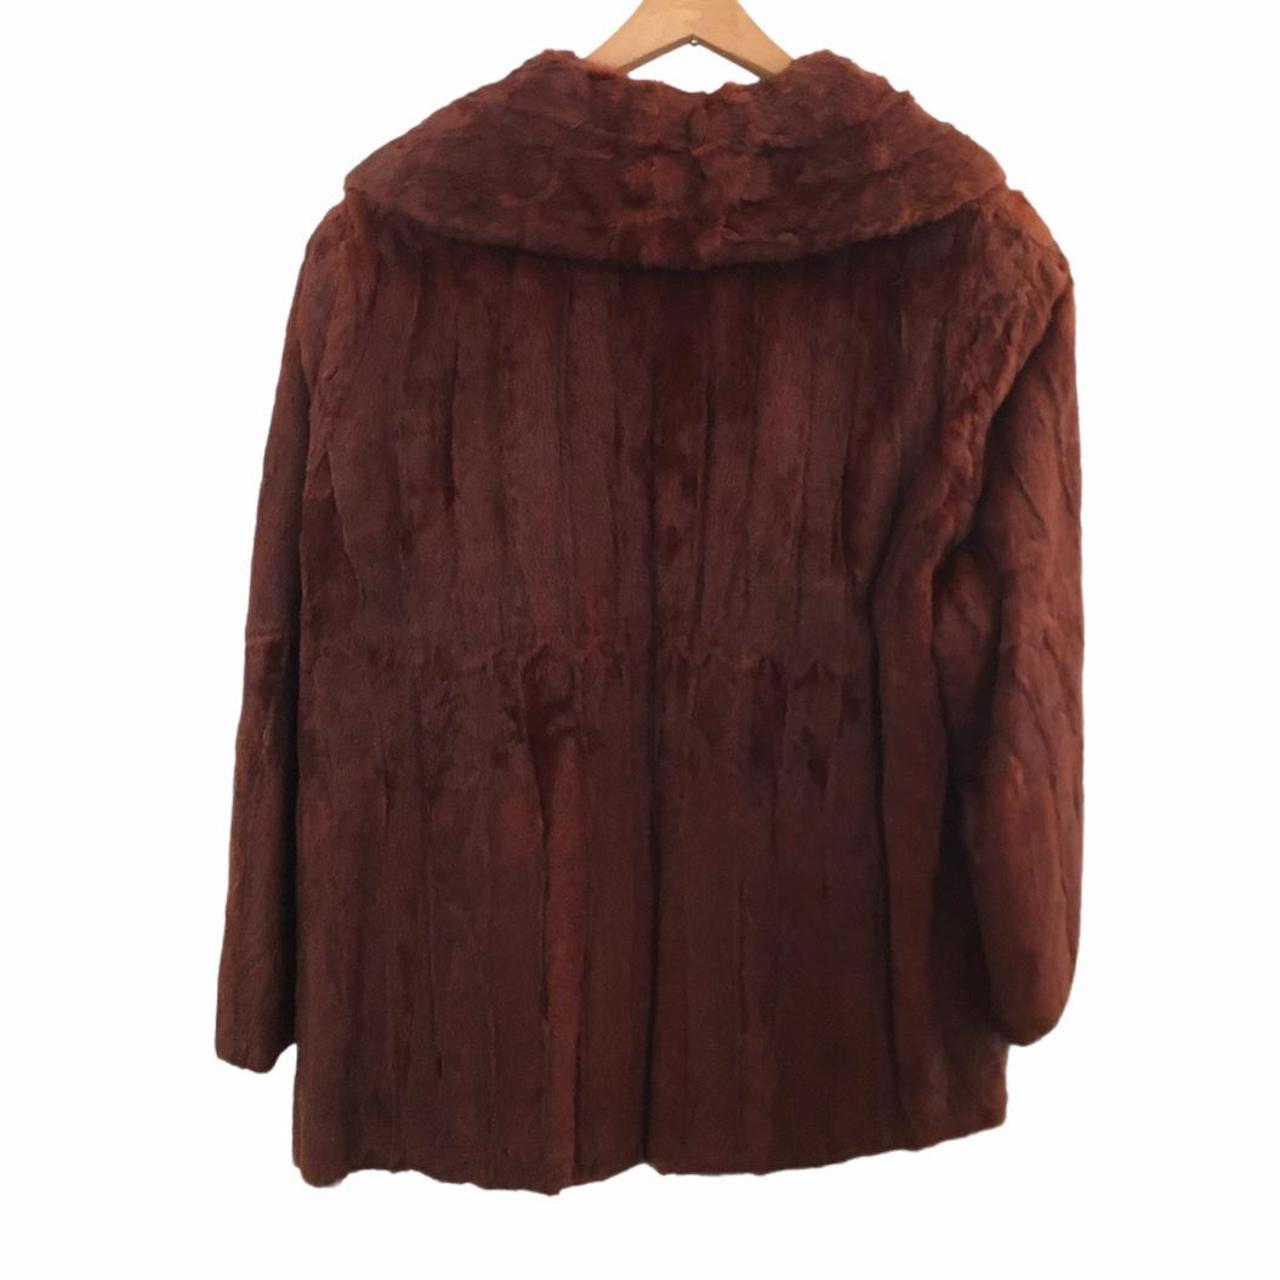 Product Image 2 - Authentic vintage brown fur coat